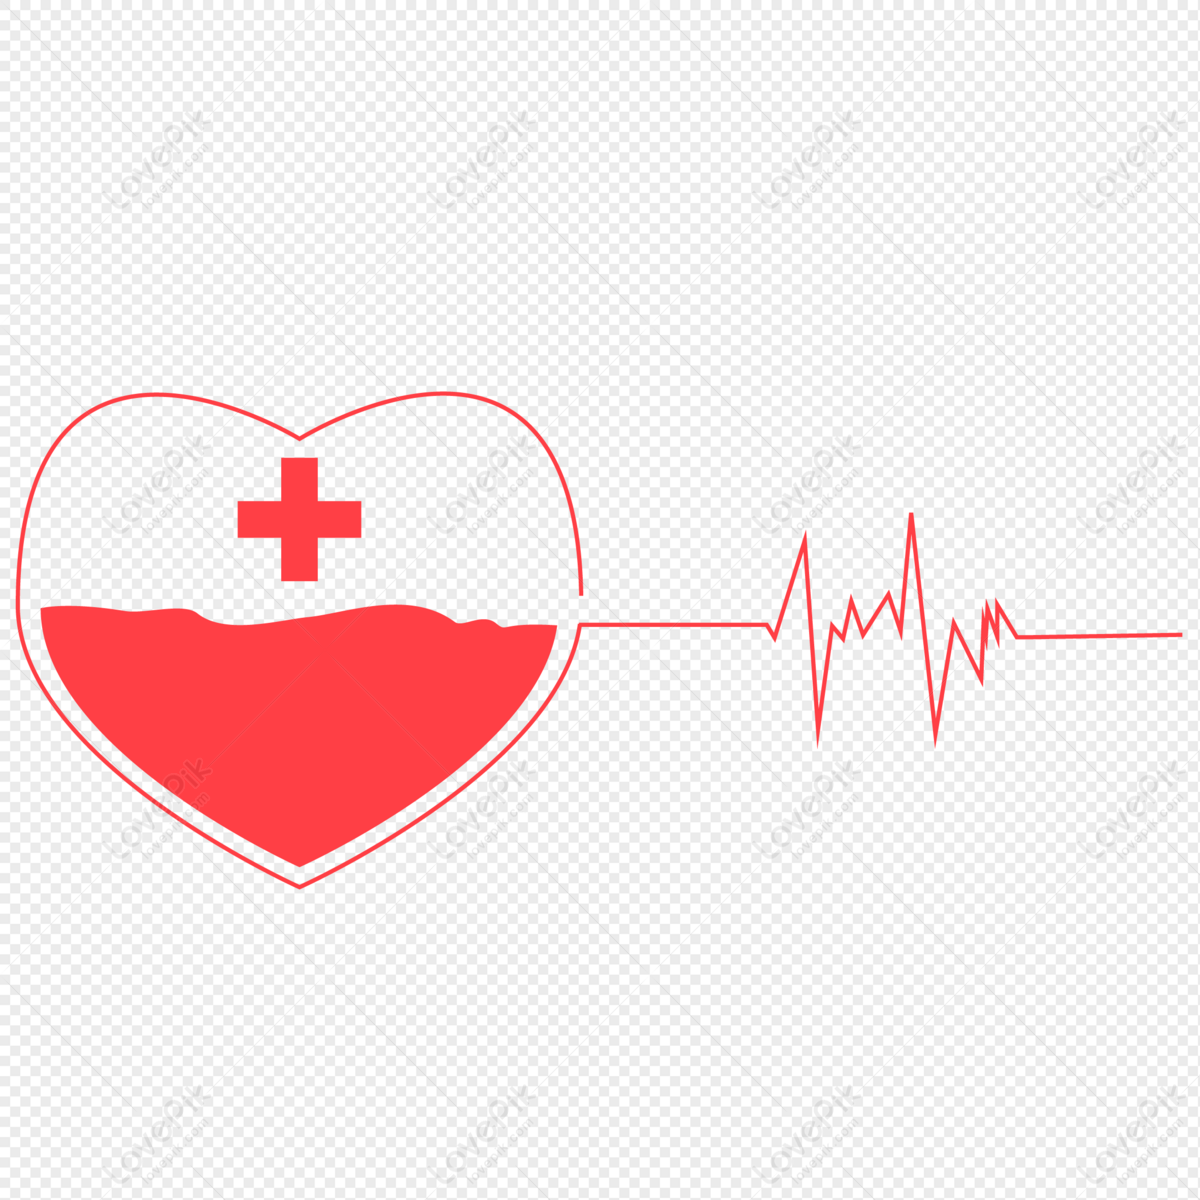 Любовь игл. Сердце донор вектор. Донор фон. Донор PNG. Значок в виде донорского сердца.